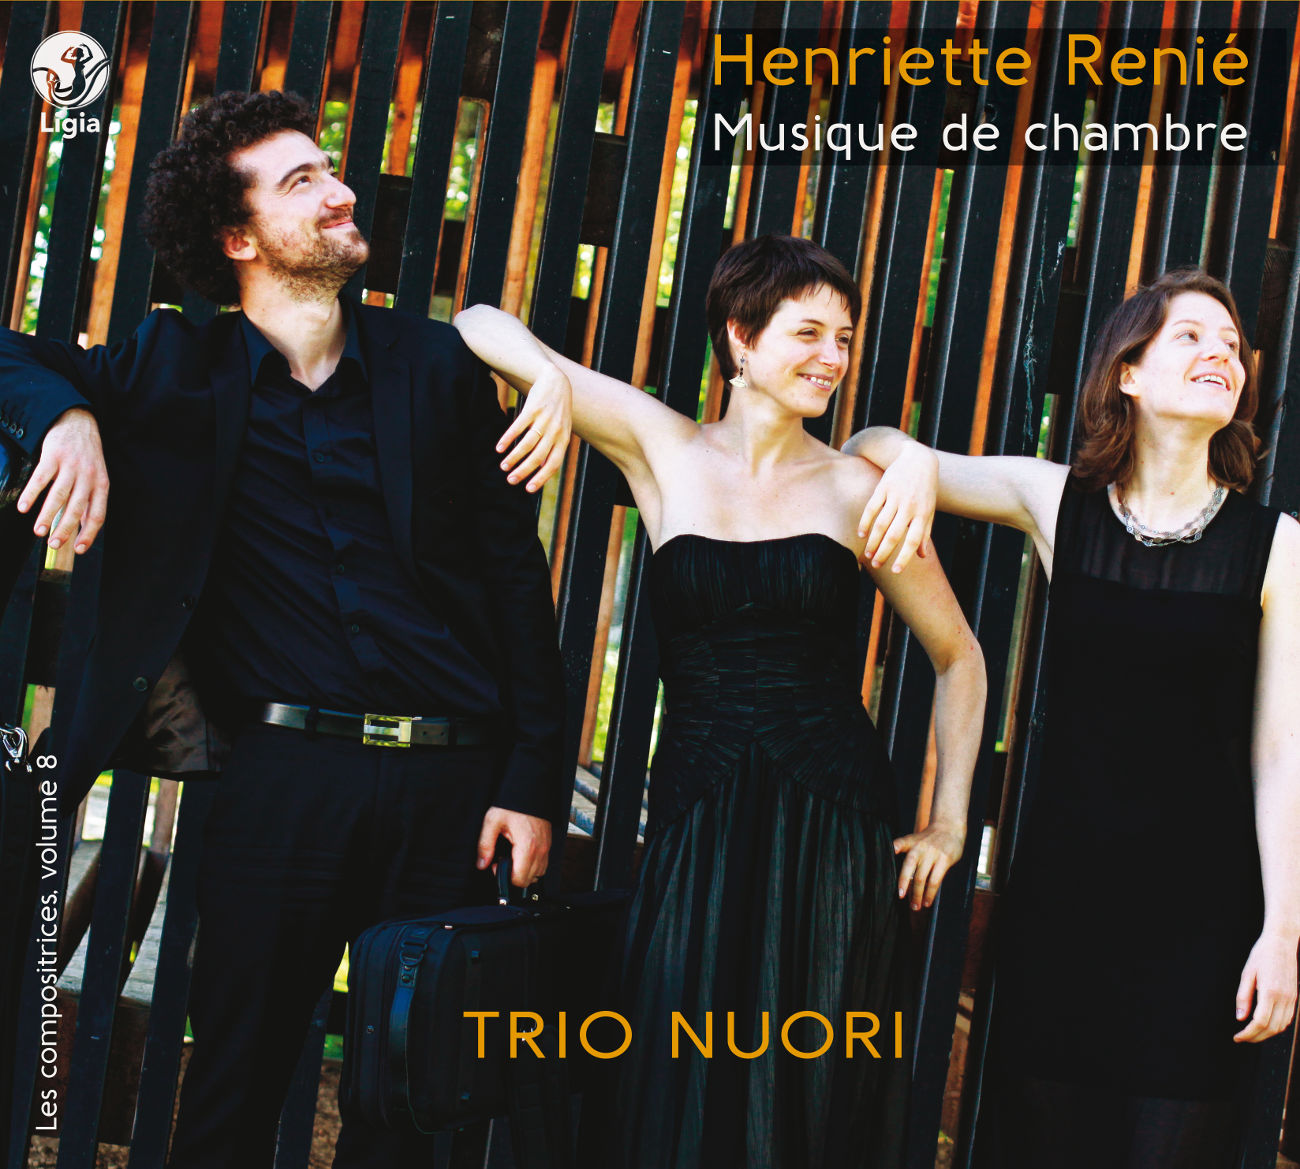 trio nuori, henriette renié - musique de chambre